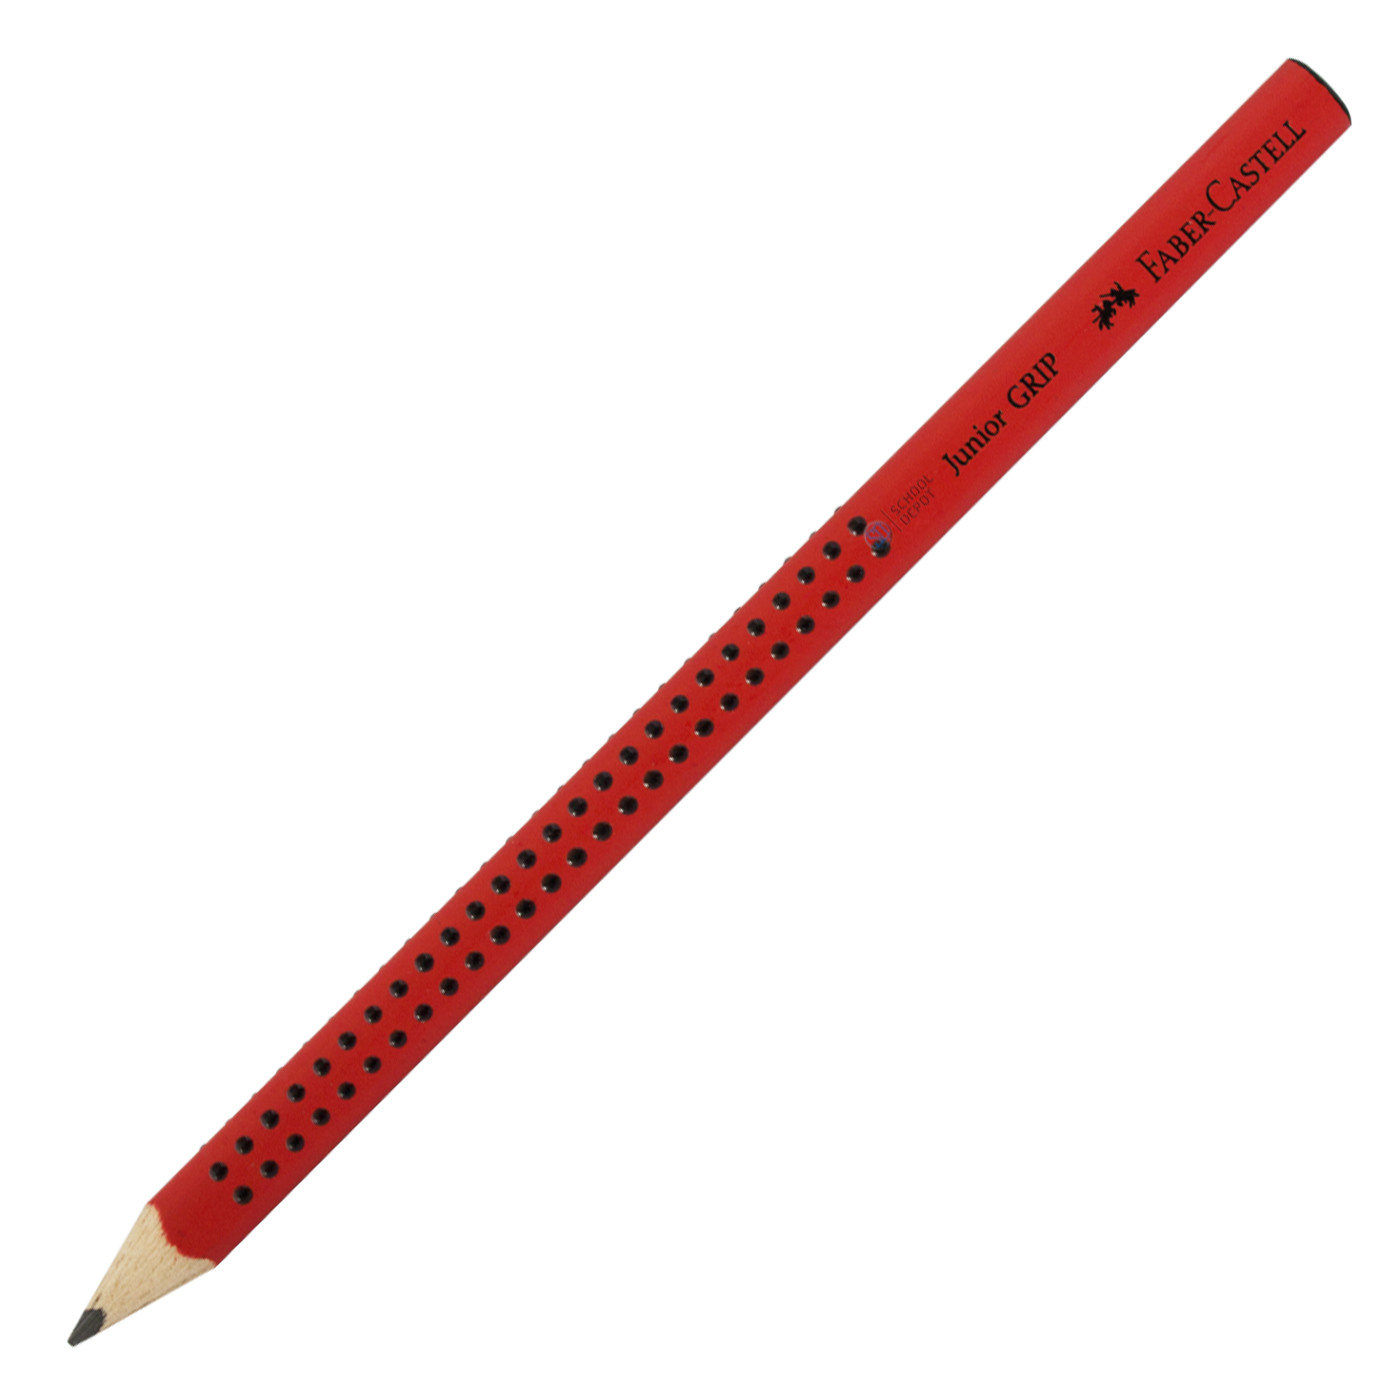 Faber-Castell Junior Grip Triangular Pencil HB